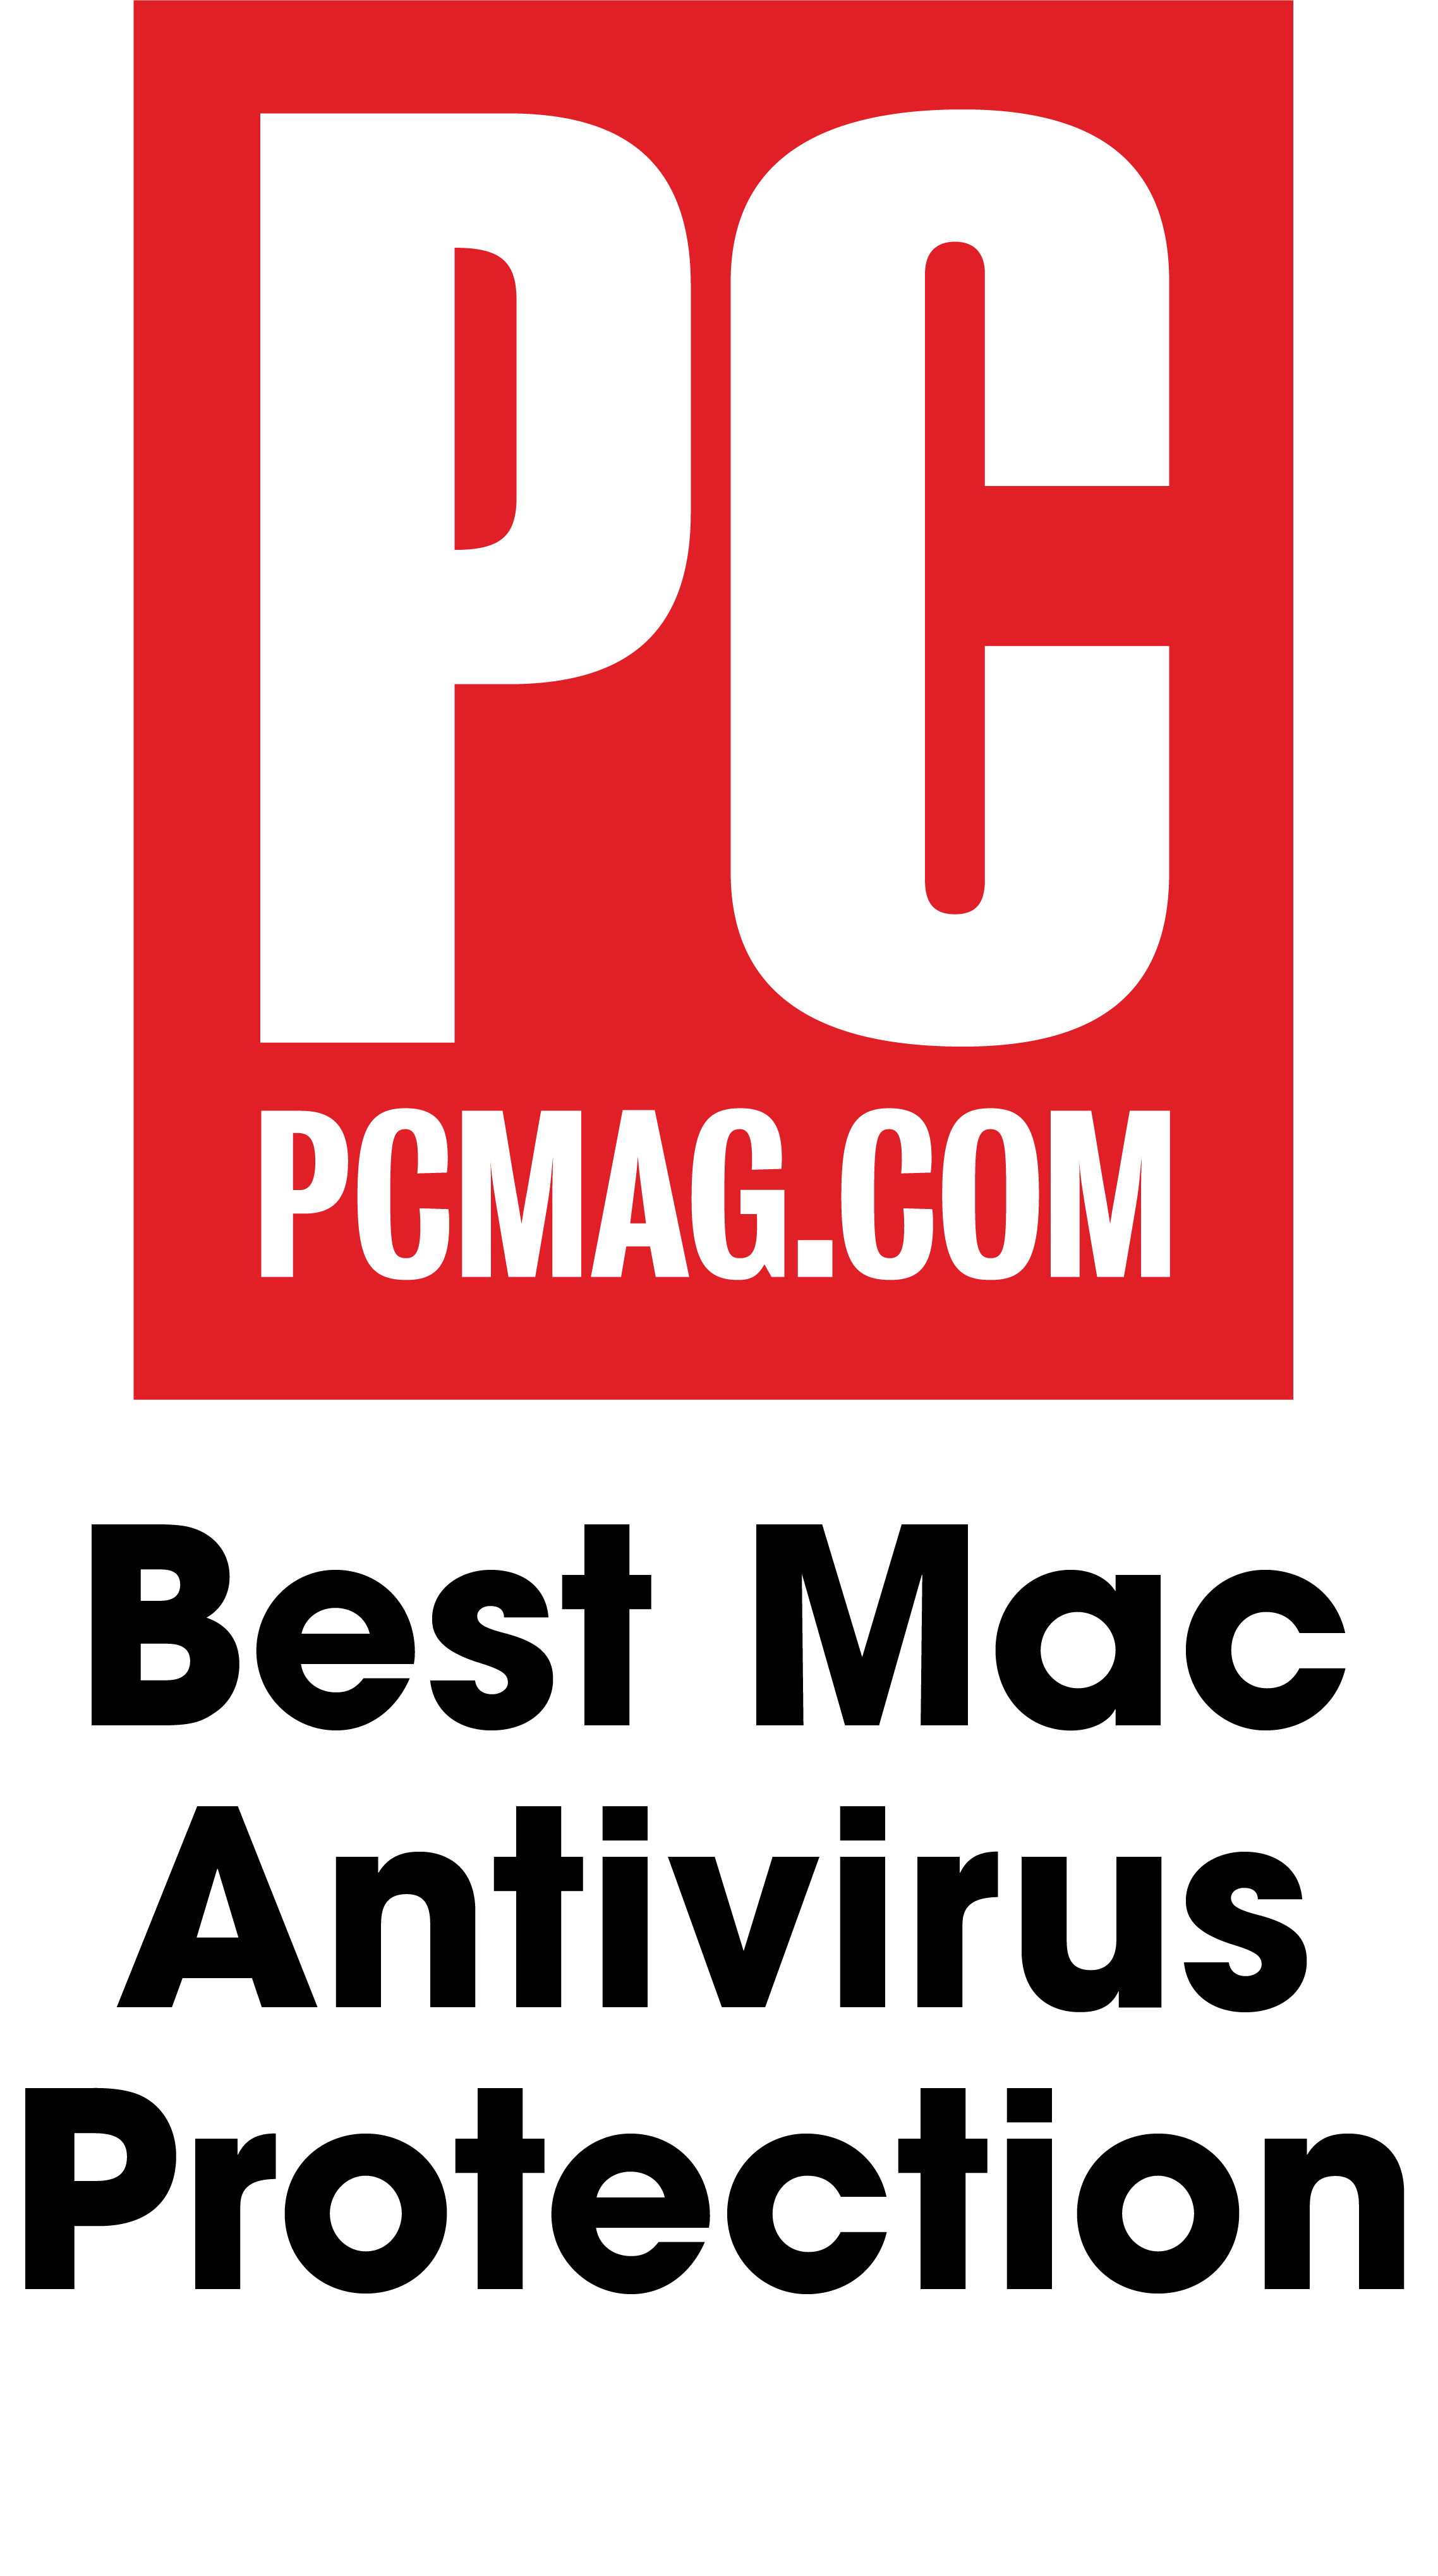 Bitdefender Antivirus for Mac - Best Antivirus Protection for Mac